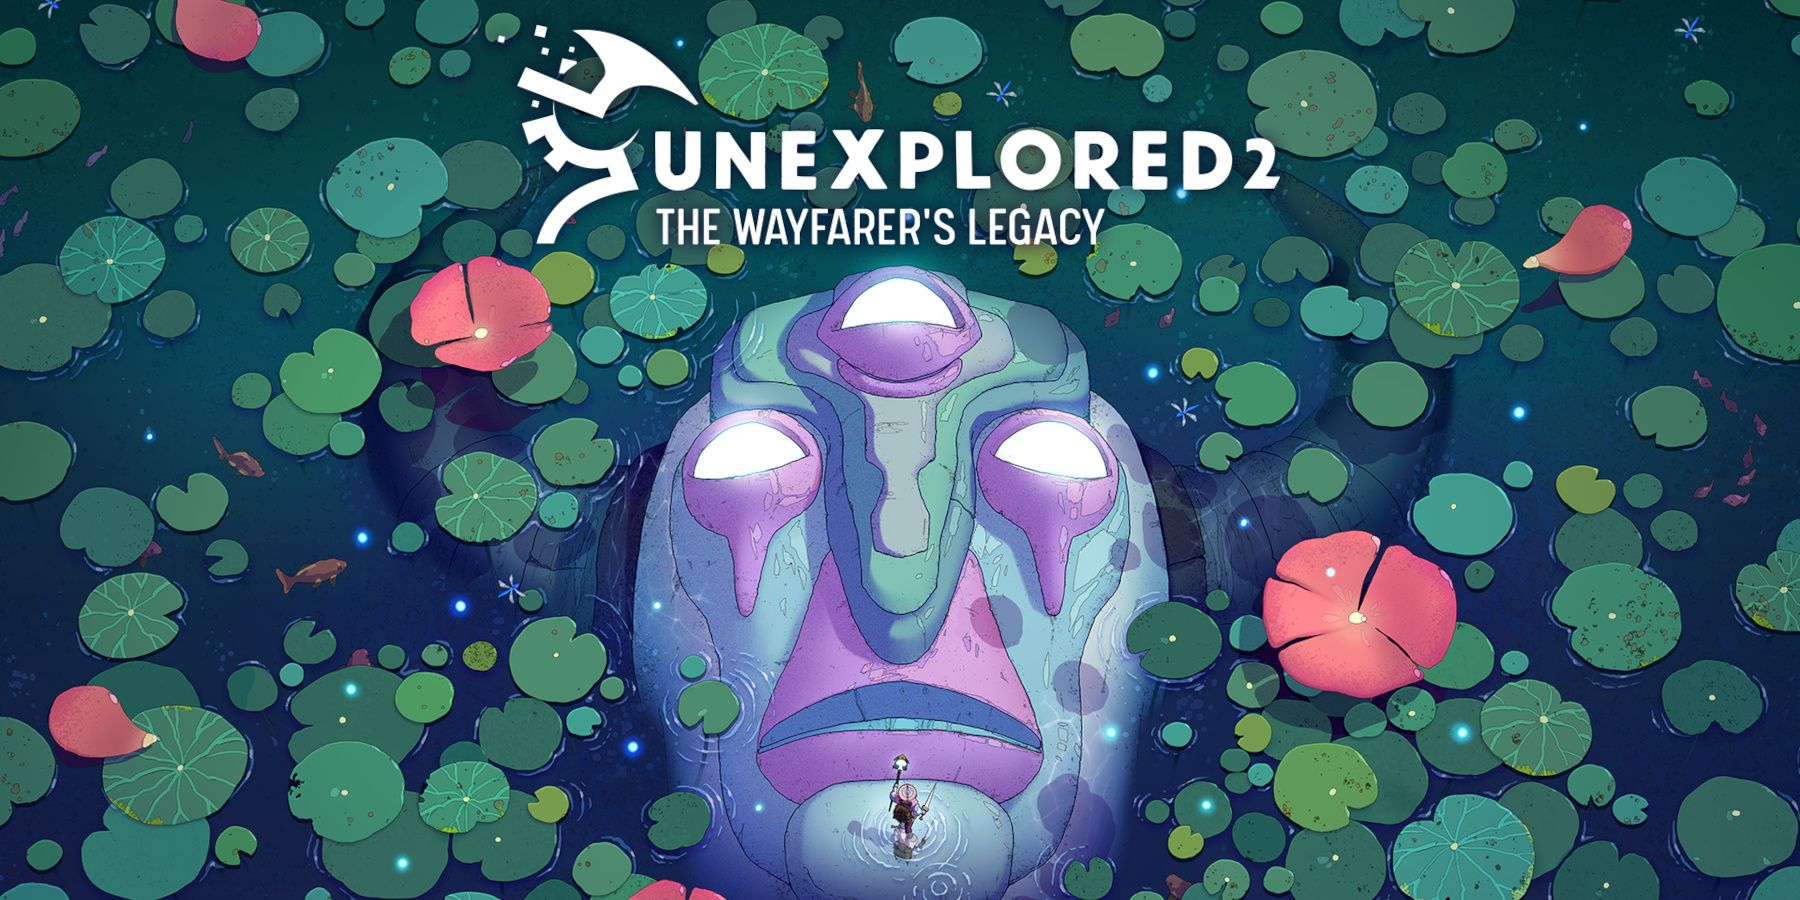 Unexplored 2: The Wayfarer’s Legacy Review – Un viaje de juego de rol Roguelike